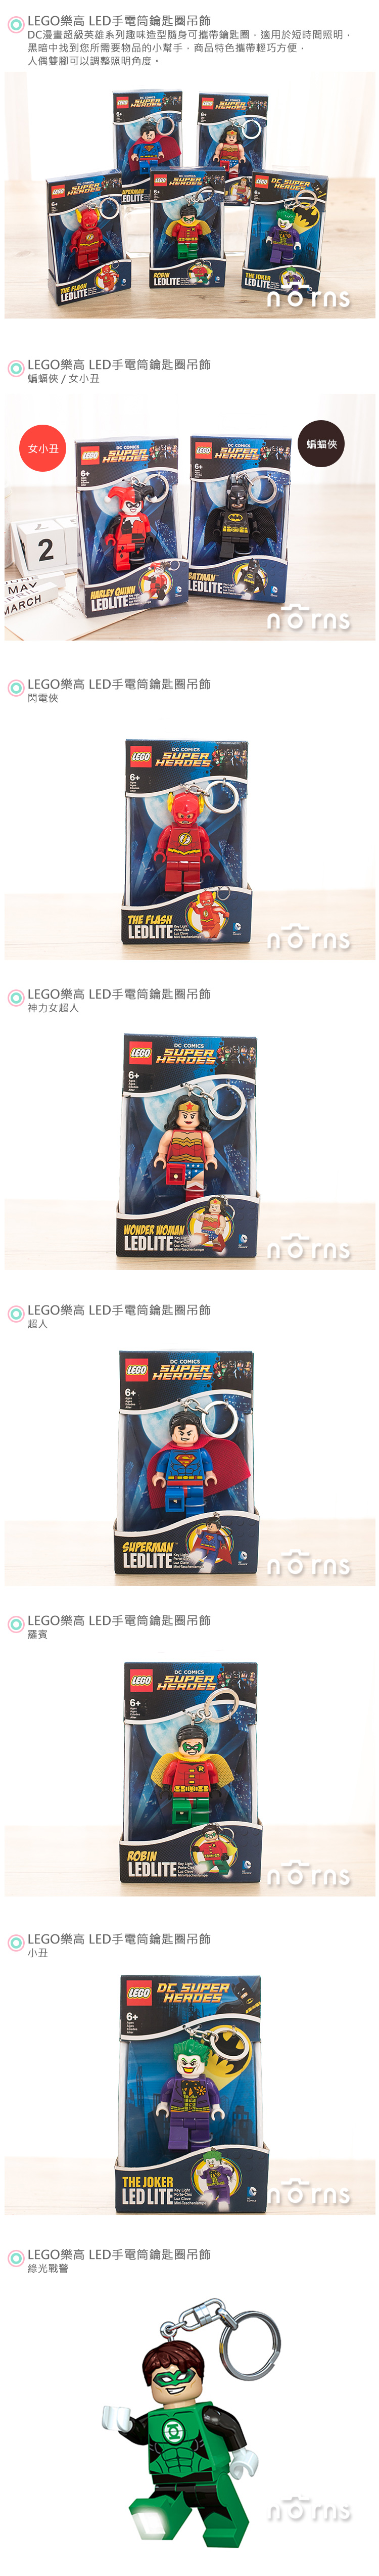 【LEGO 樂高LED手電筒鑰匙圈吊飾 DC漫畫超級英雄系列】Norns 神力女超人 小丑 閃電俠